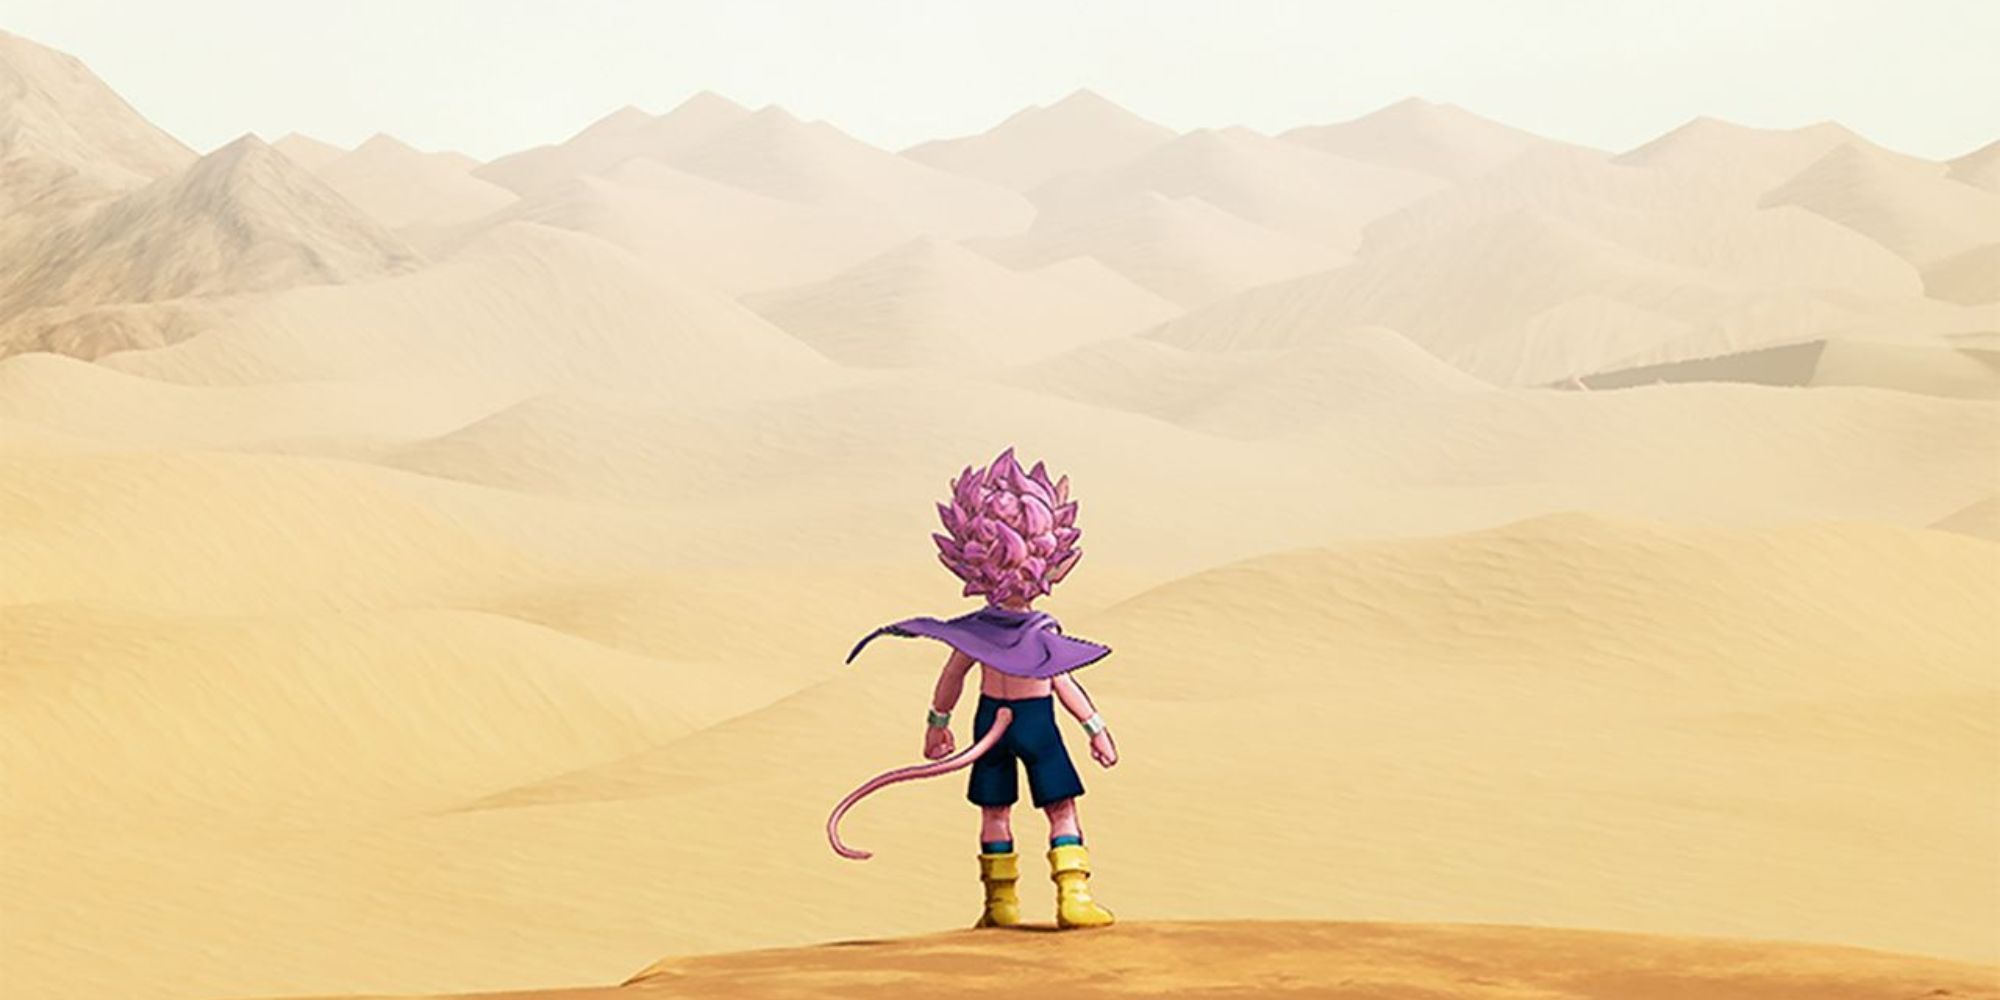 Beelzebub overlooking the desert in Sand Land.